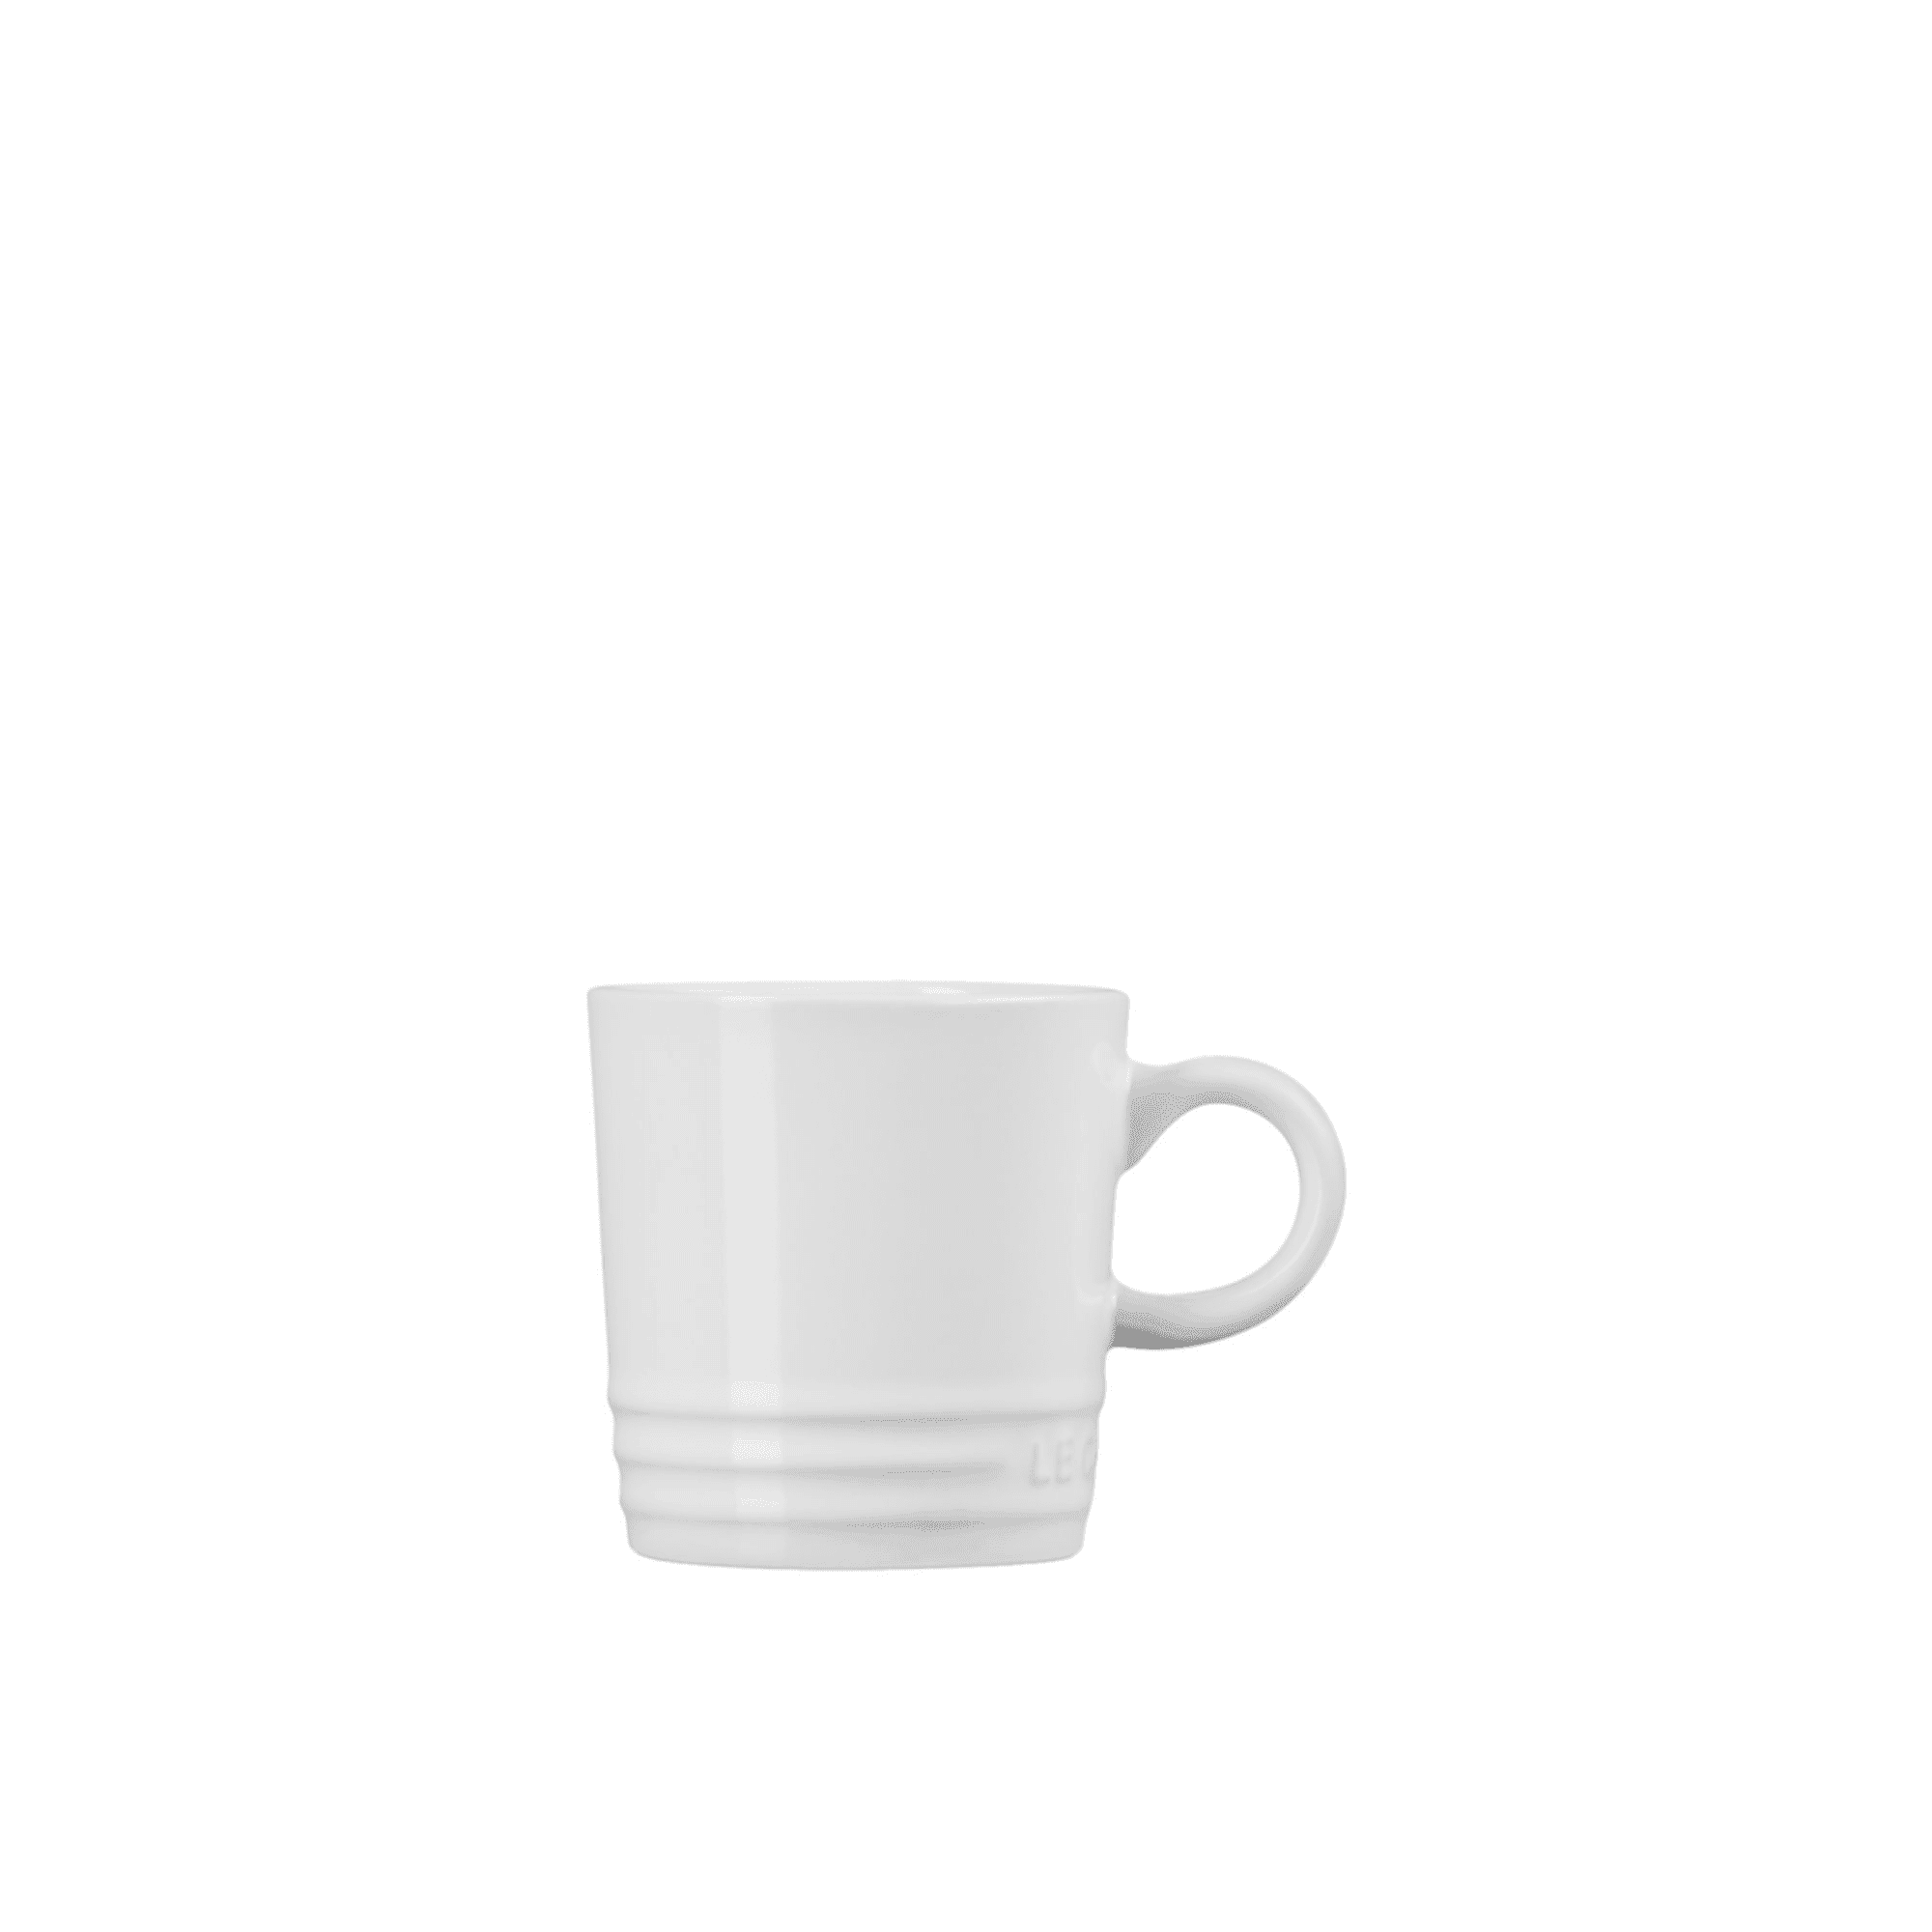 Le Creuset Stoneware Espresso Mug 100ml White Image 3